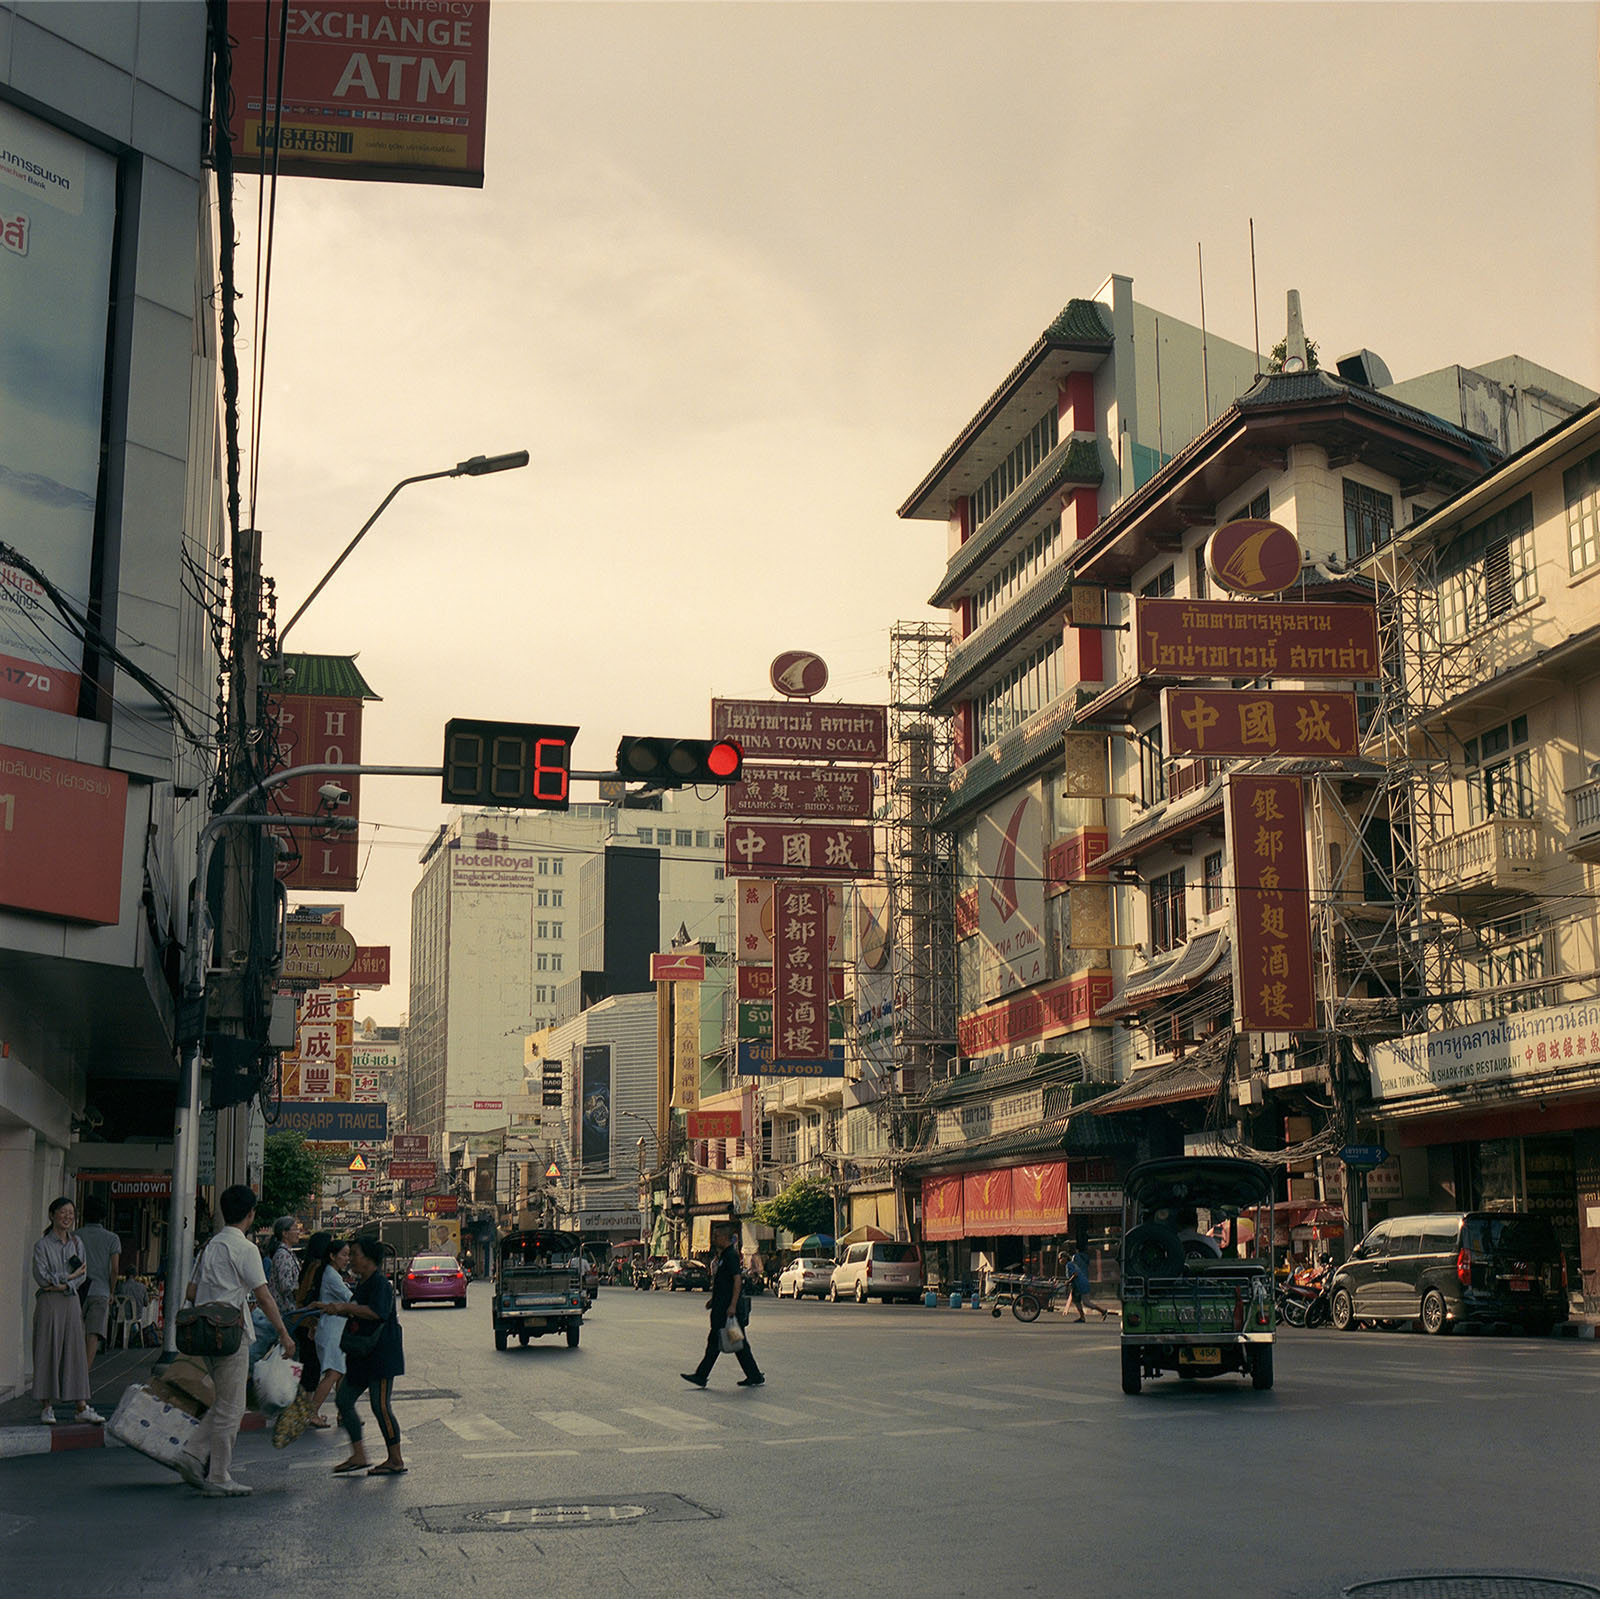 China Town street scene Bangkok, Thailand.